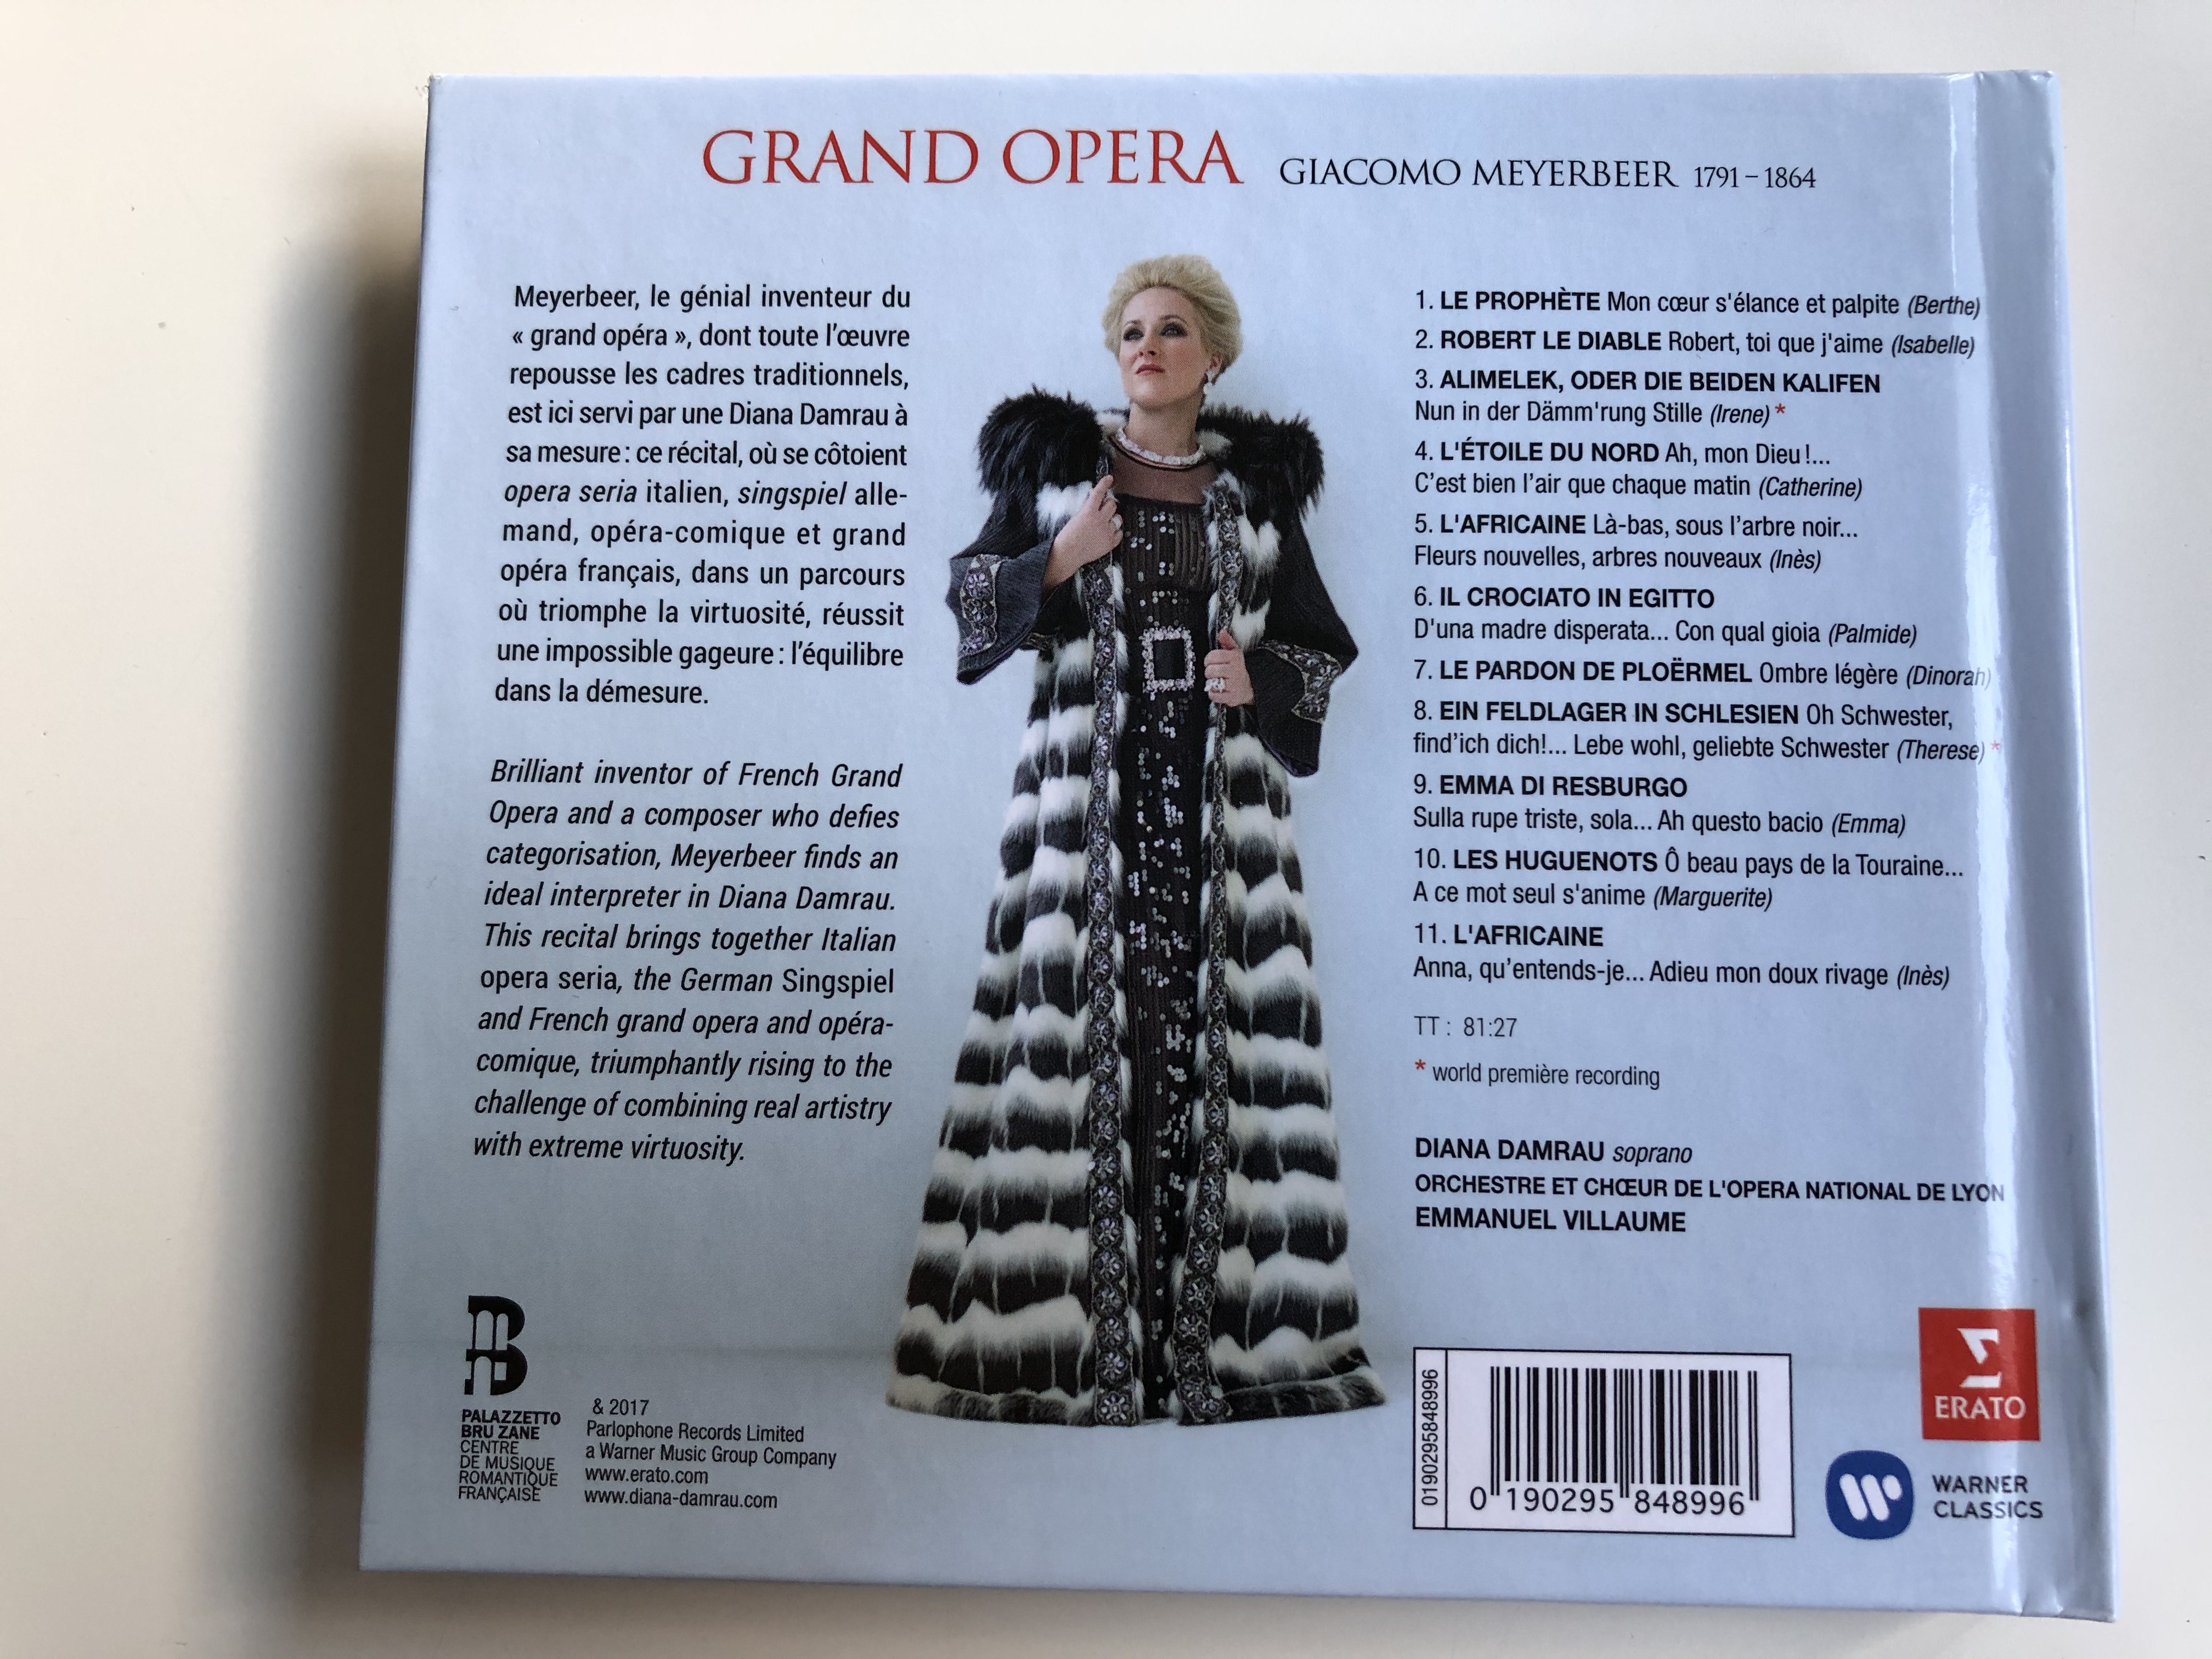 meyerbeer-grand-opera-diana-damrau-orchestre-et-ch-ur-de-l-op-ra-national-de-lyon-emmanuel-villaume-erato-audio-cd-2017-0190295848996-10-.jpg